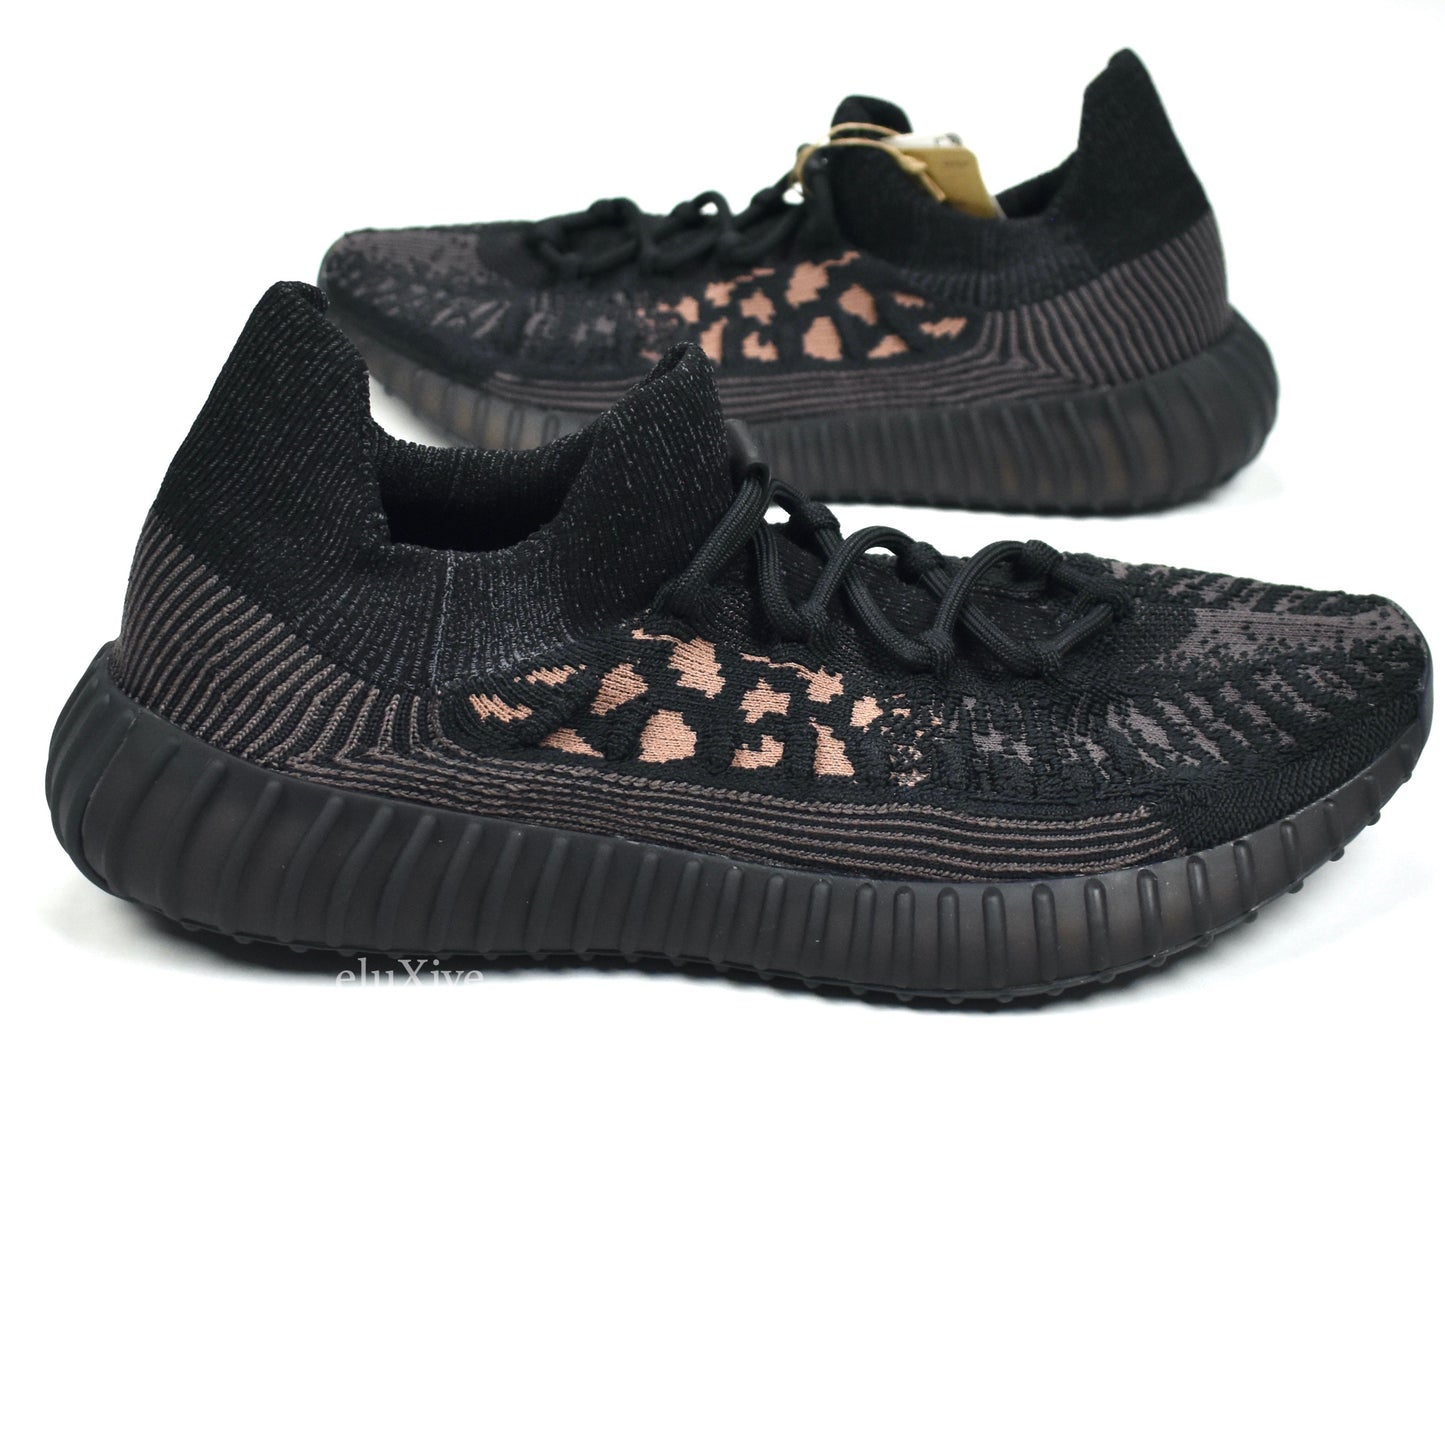 Adidas x Kanye West - Yeezy 350 V2 CMPCT Knit (Carbon Slate)